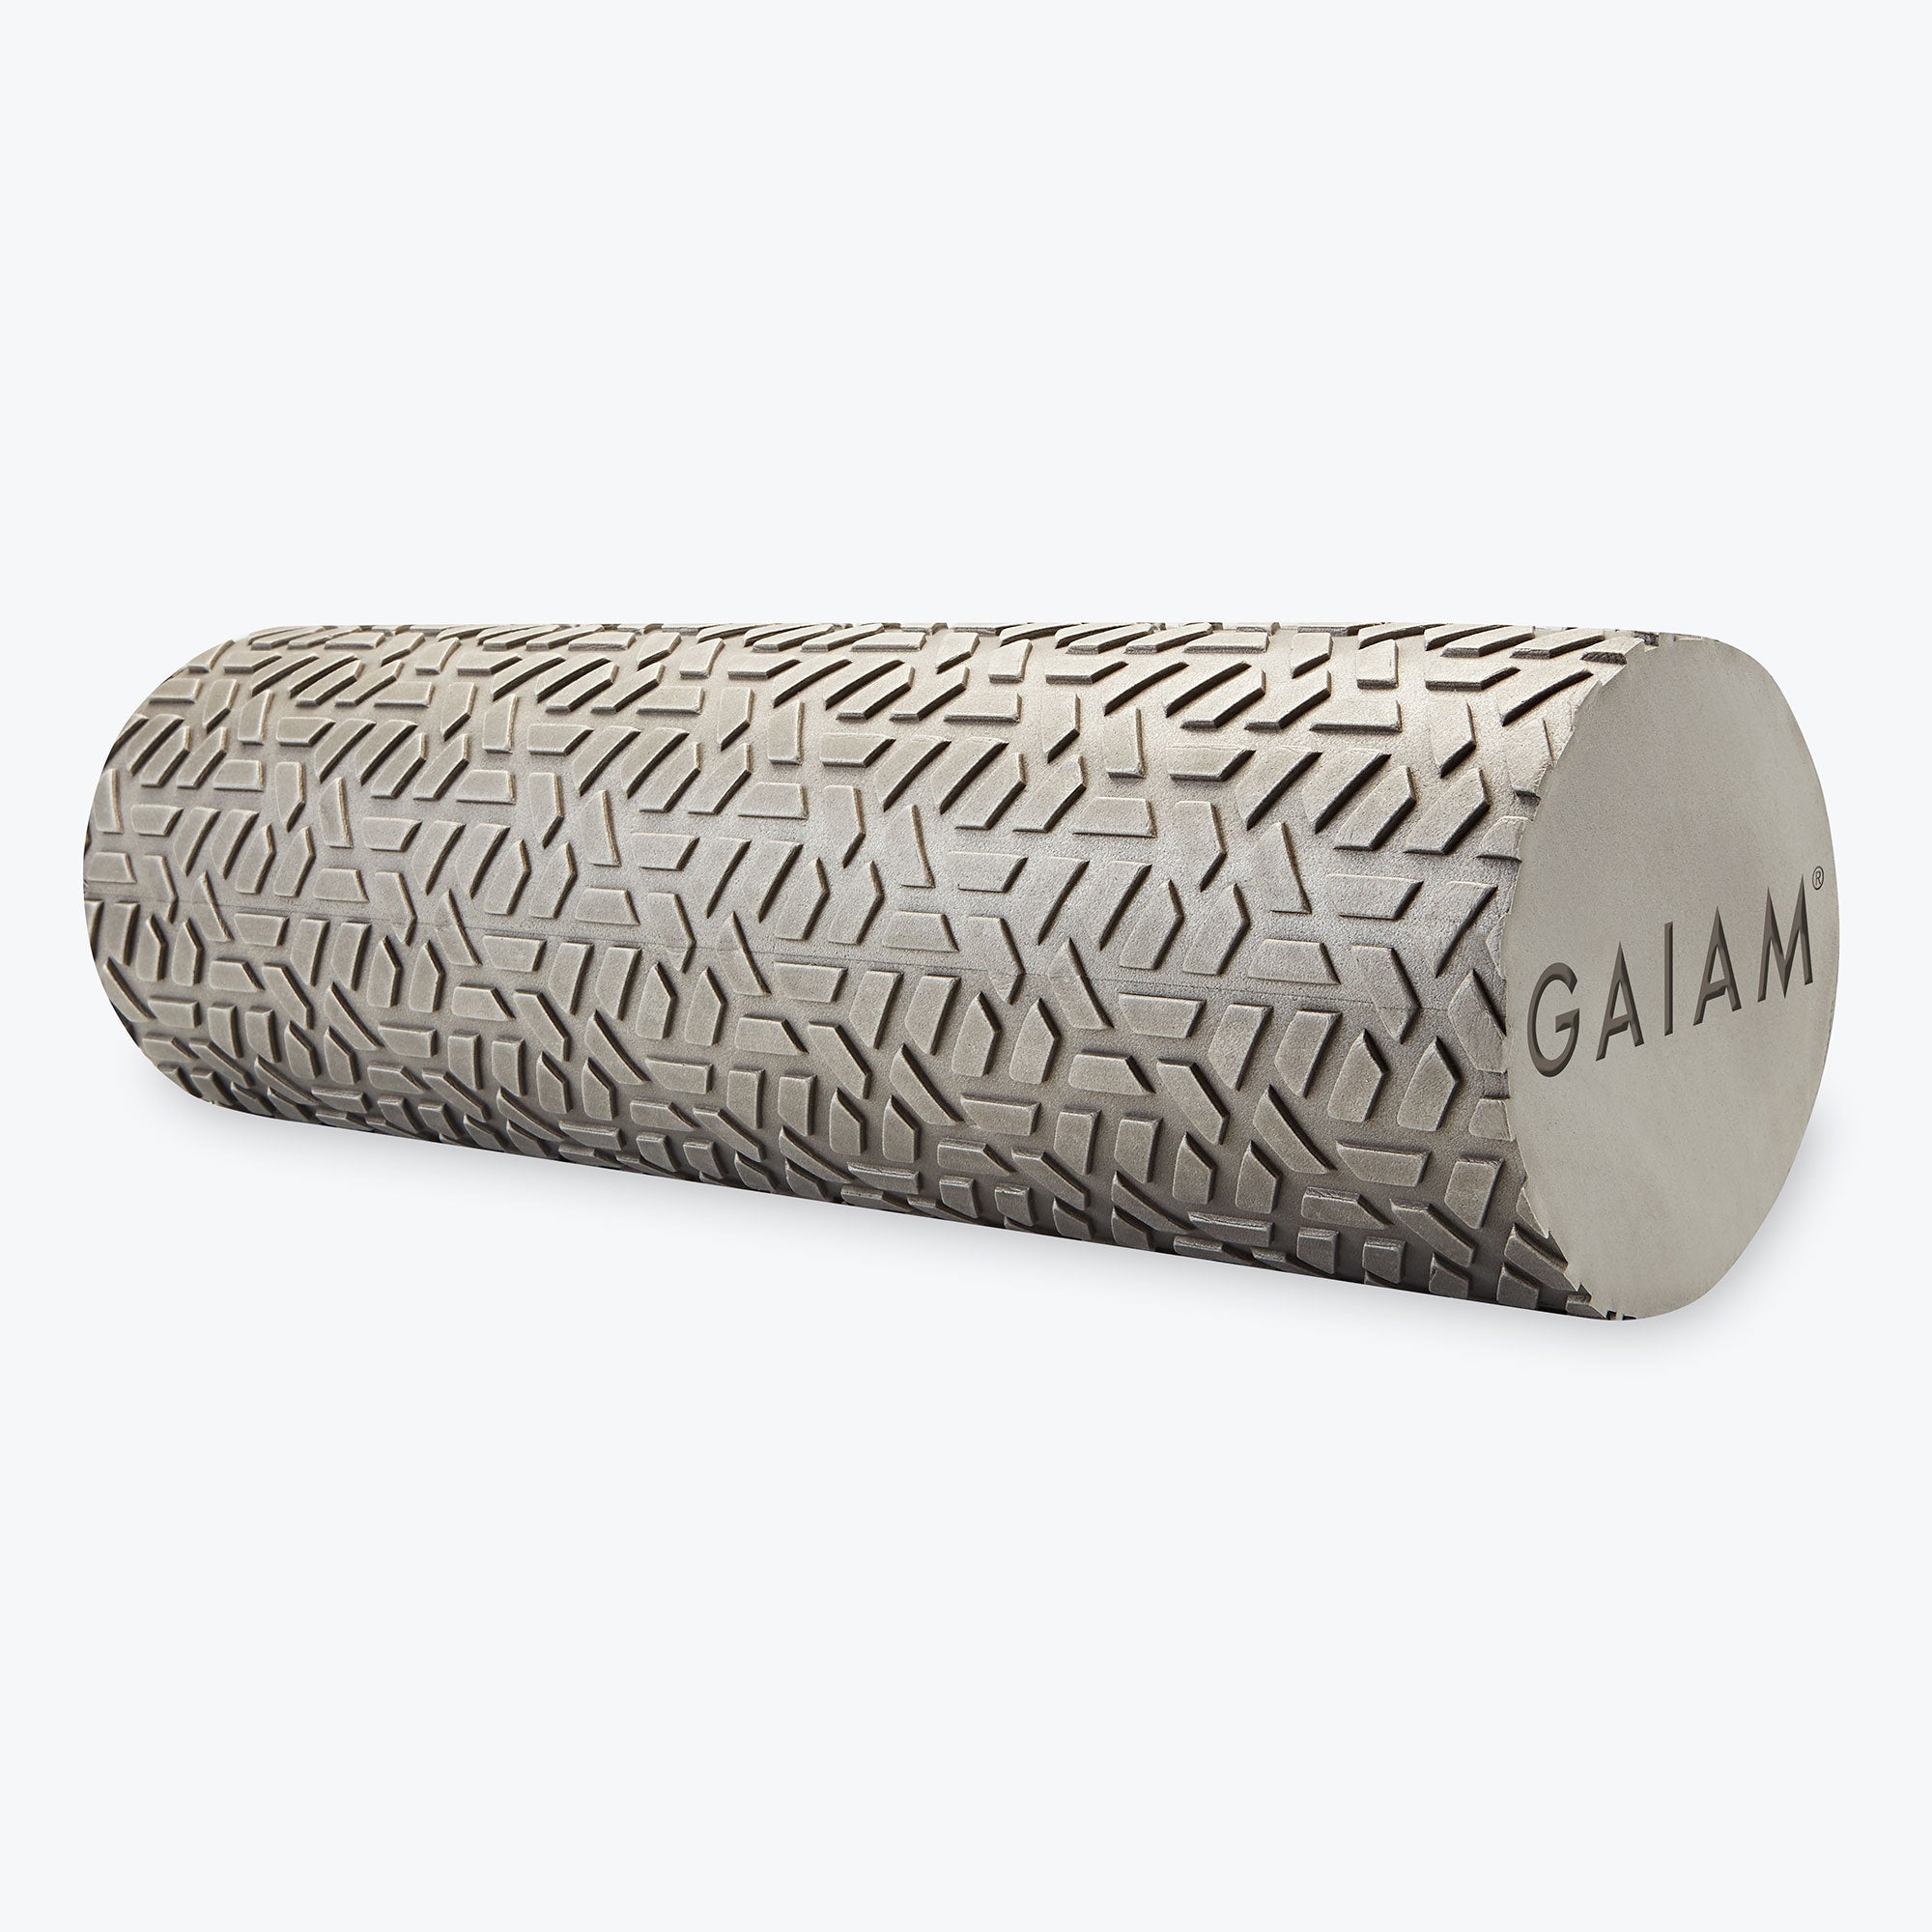 Restore Textured Foam Roller - Gaiam